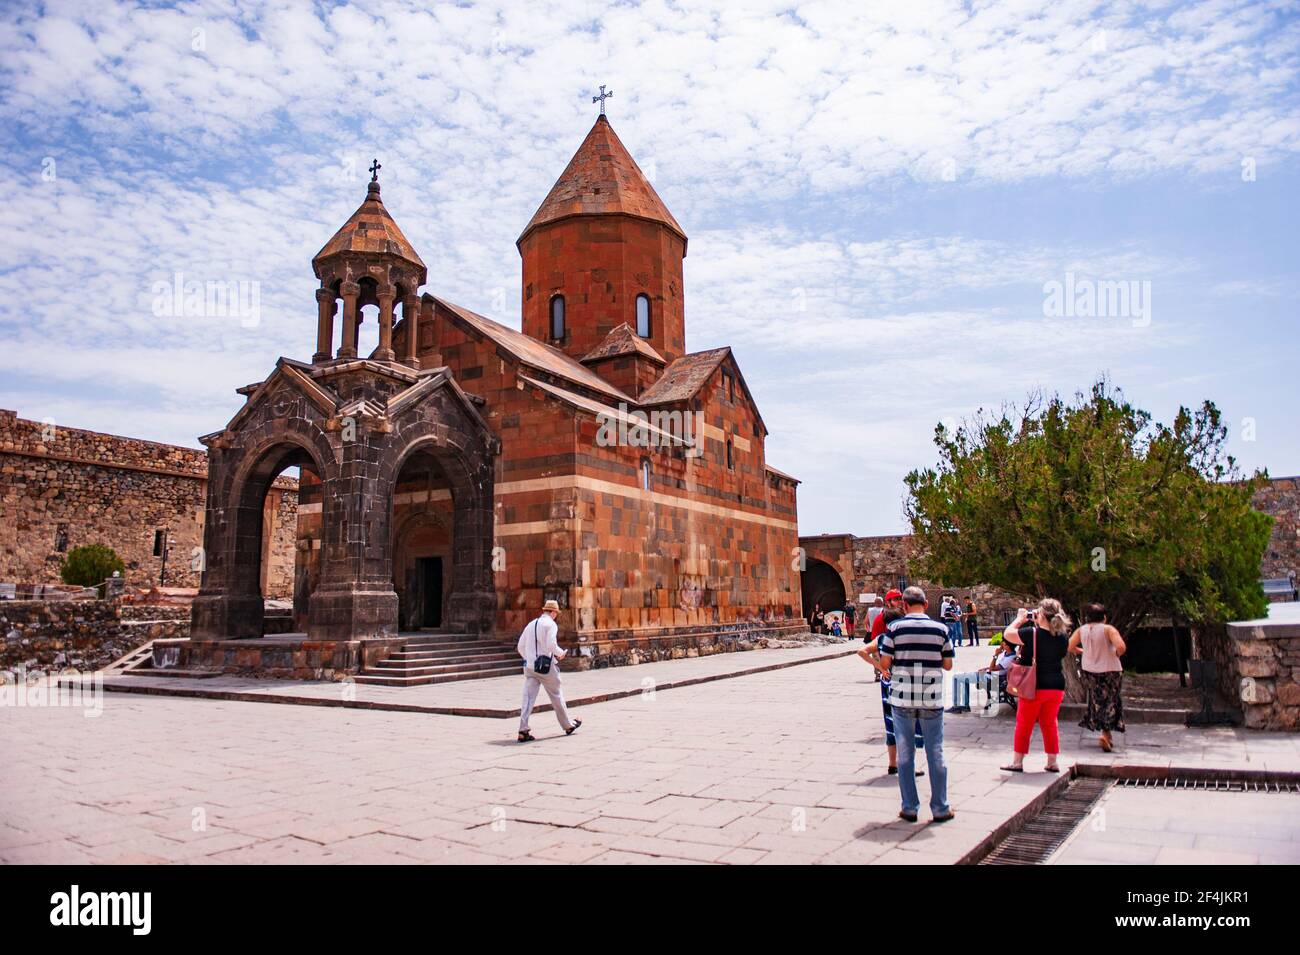 Khor Virap, Armenia - July 5, 2018: Tourists in the courtyard of the Khor Virap monastery in Armenia Stock Photo